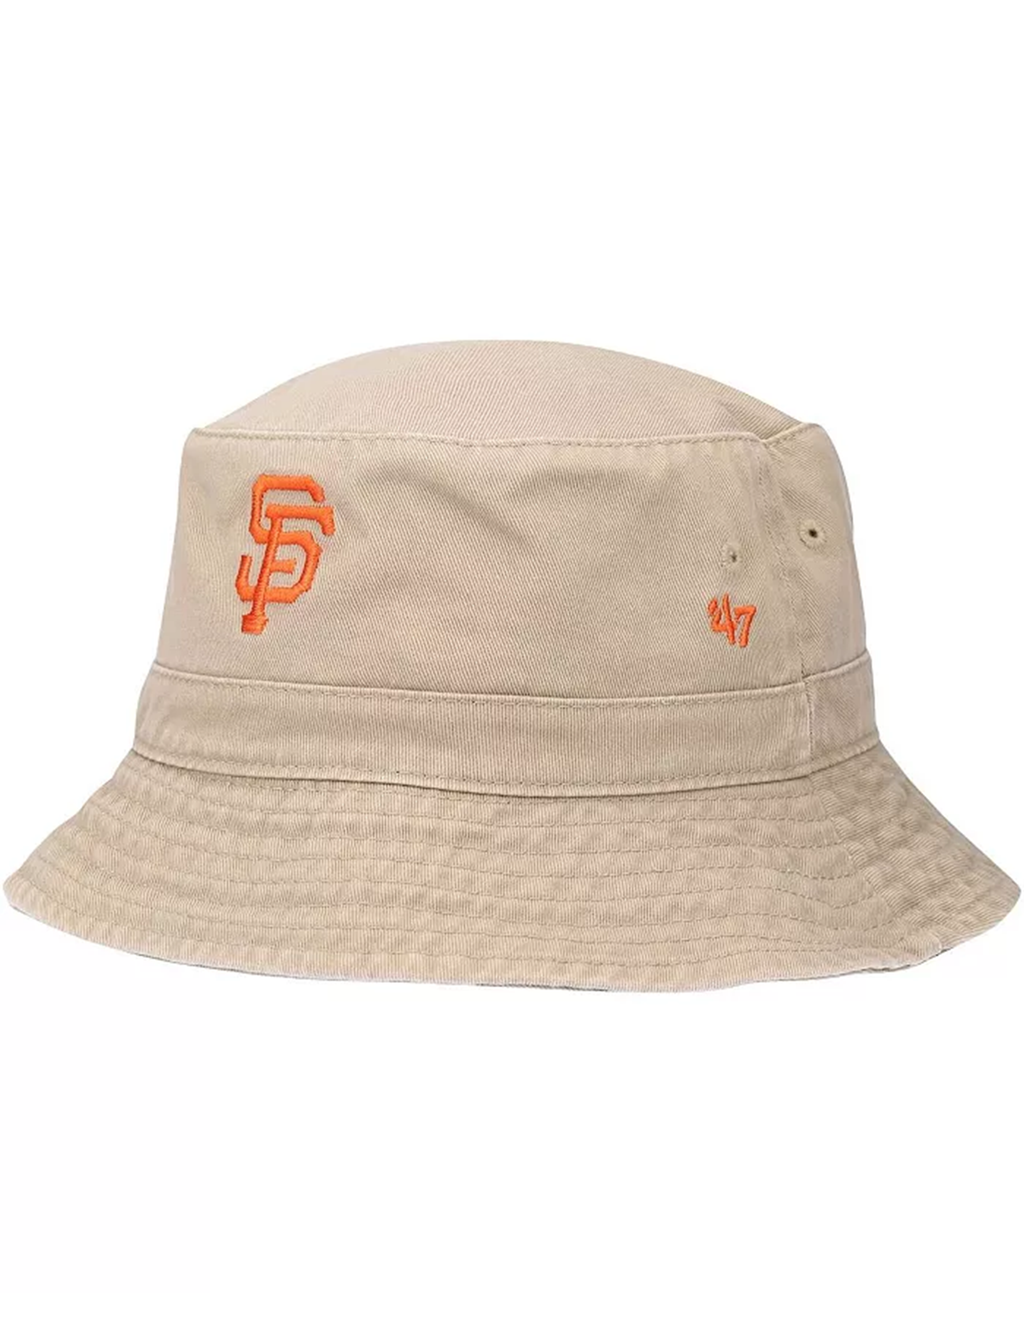 SF Giants Bucket Hat, Khaki